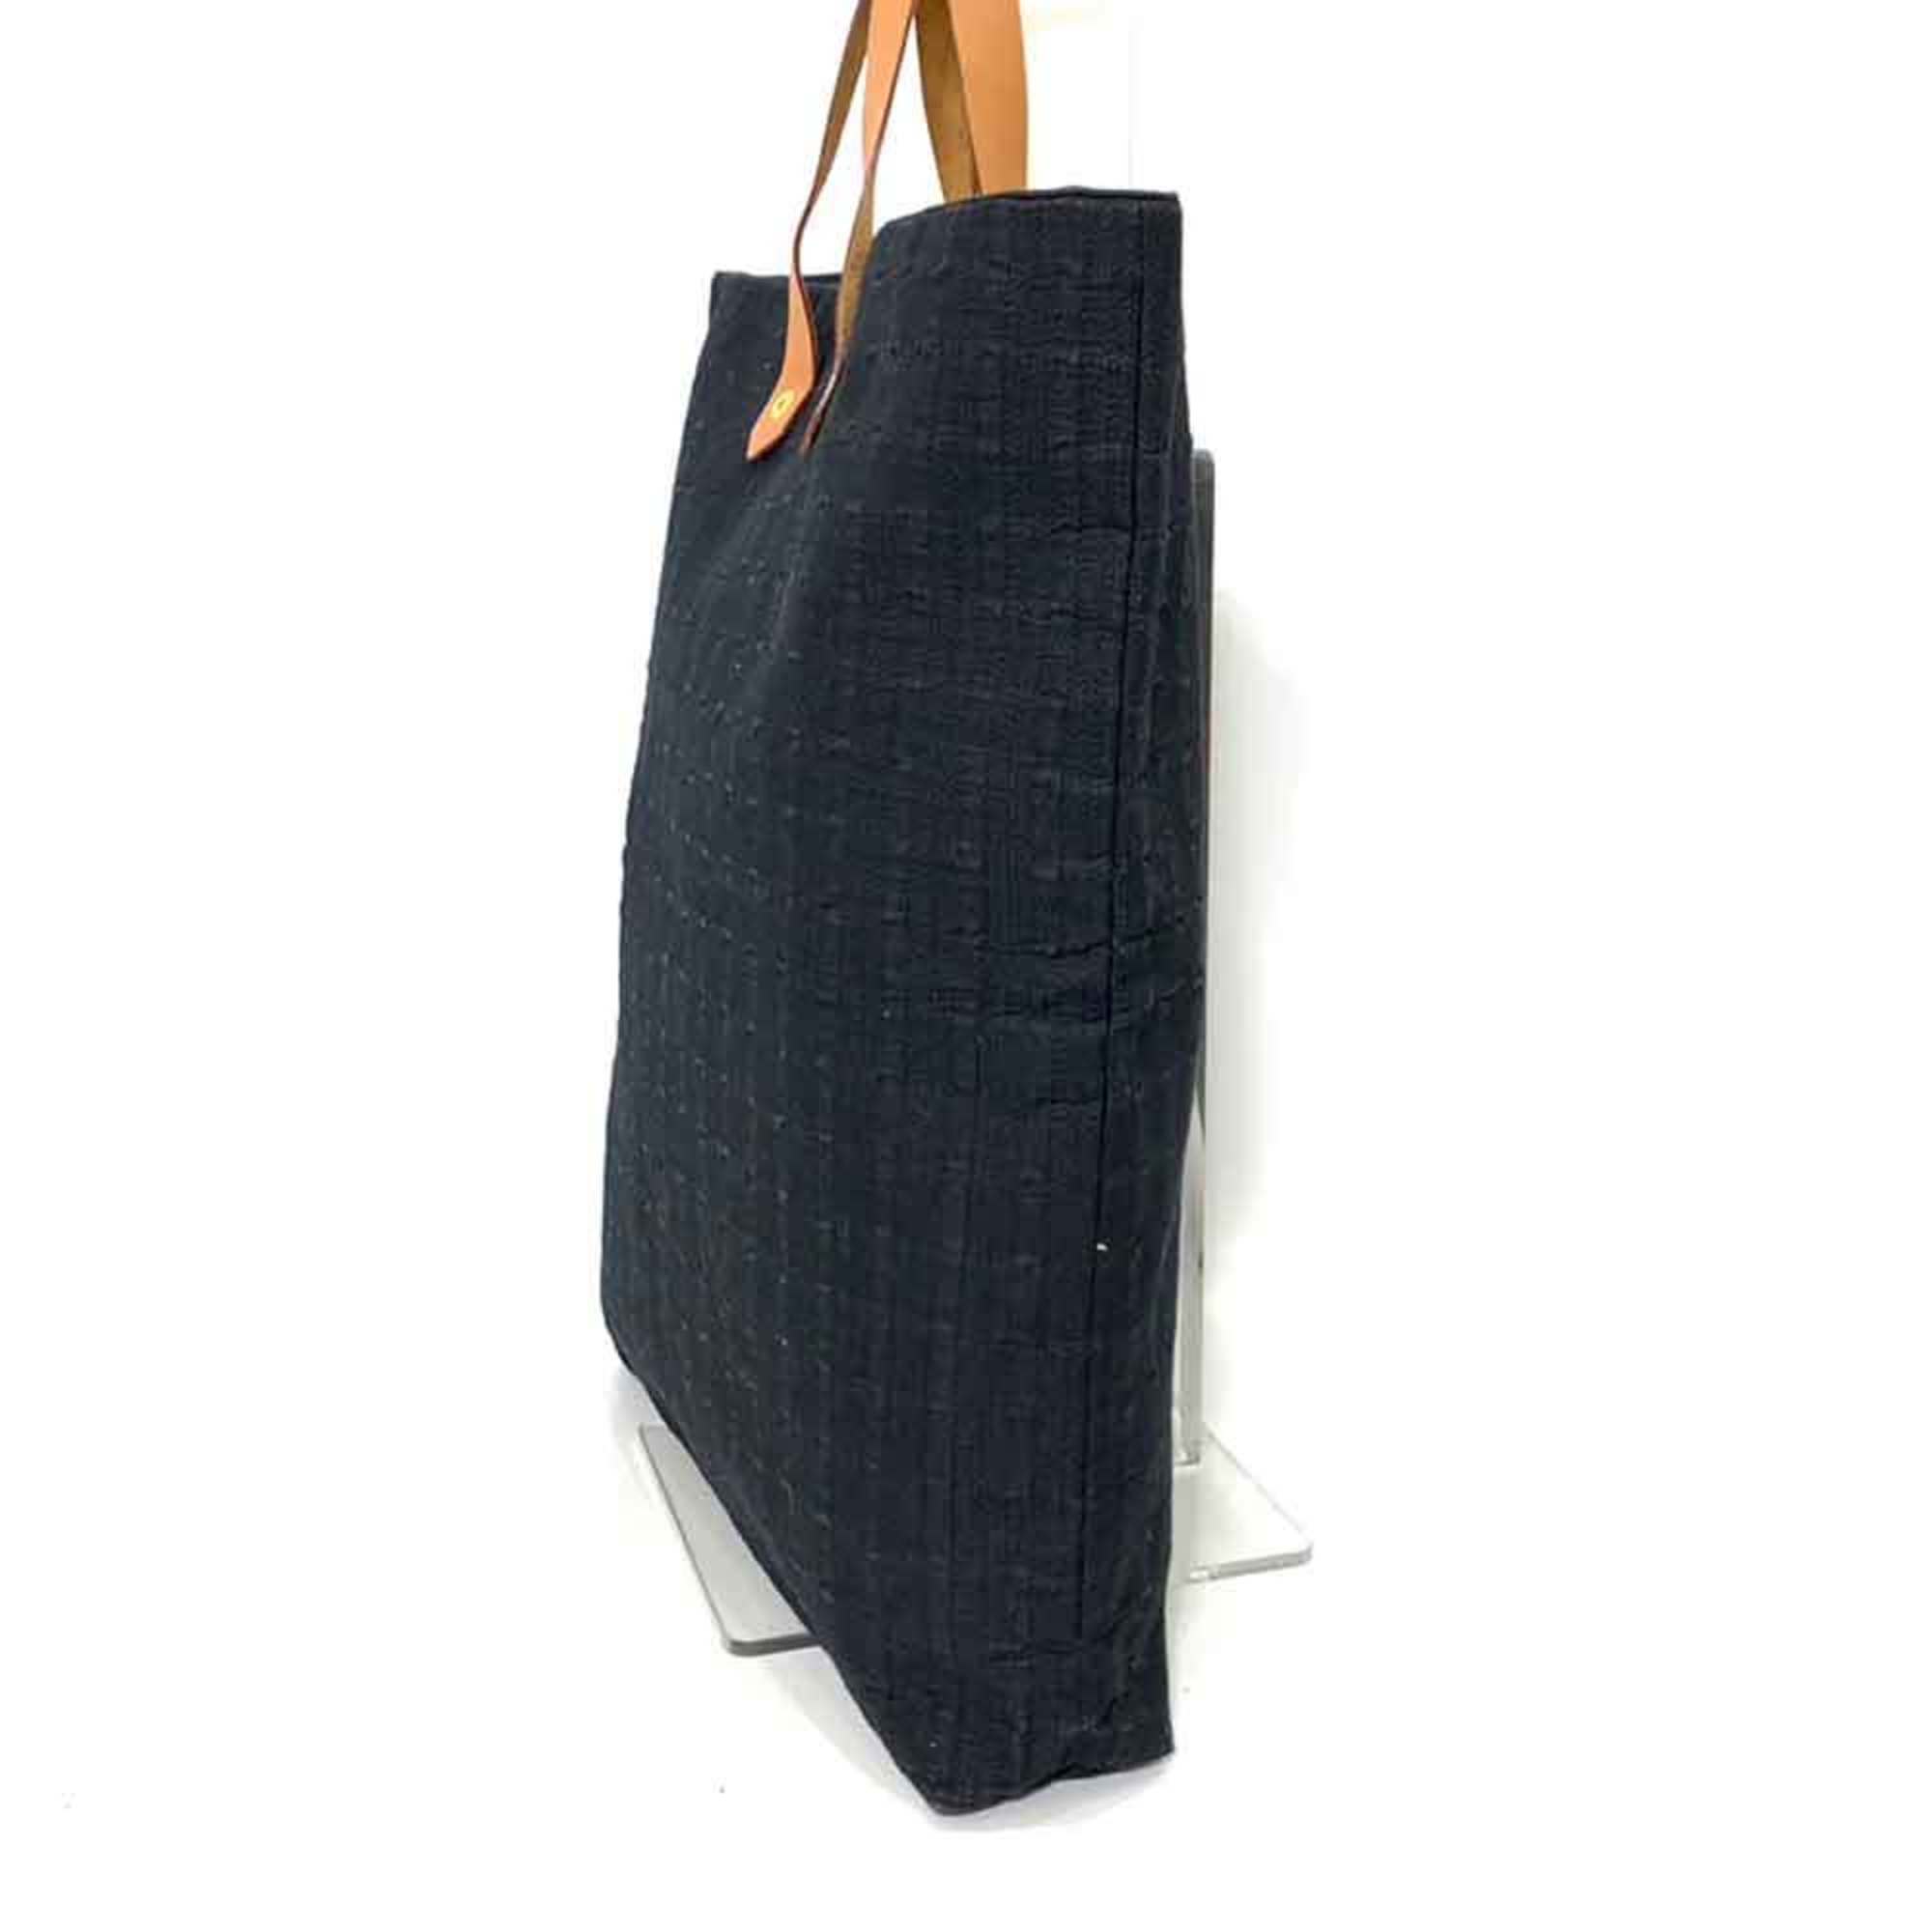 Hermes Bag Amedaba GM Black x Brown Tote Handbag Women's Men's Cotton Canvas Leather HERMES